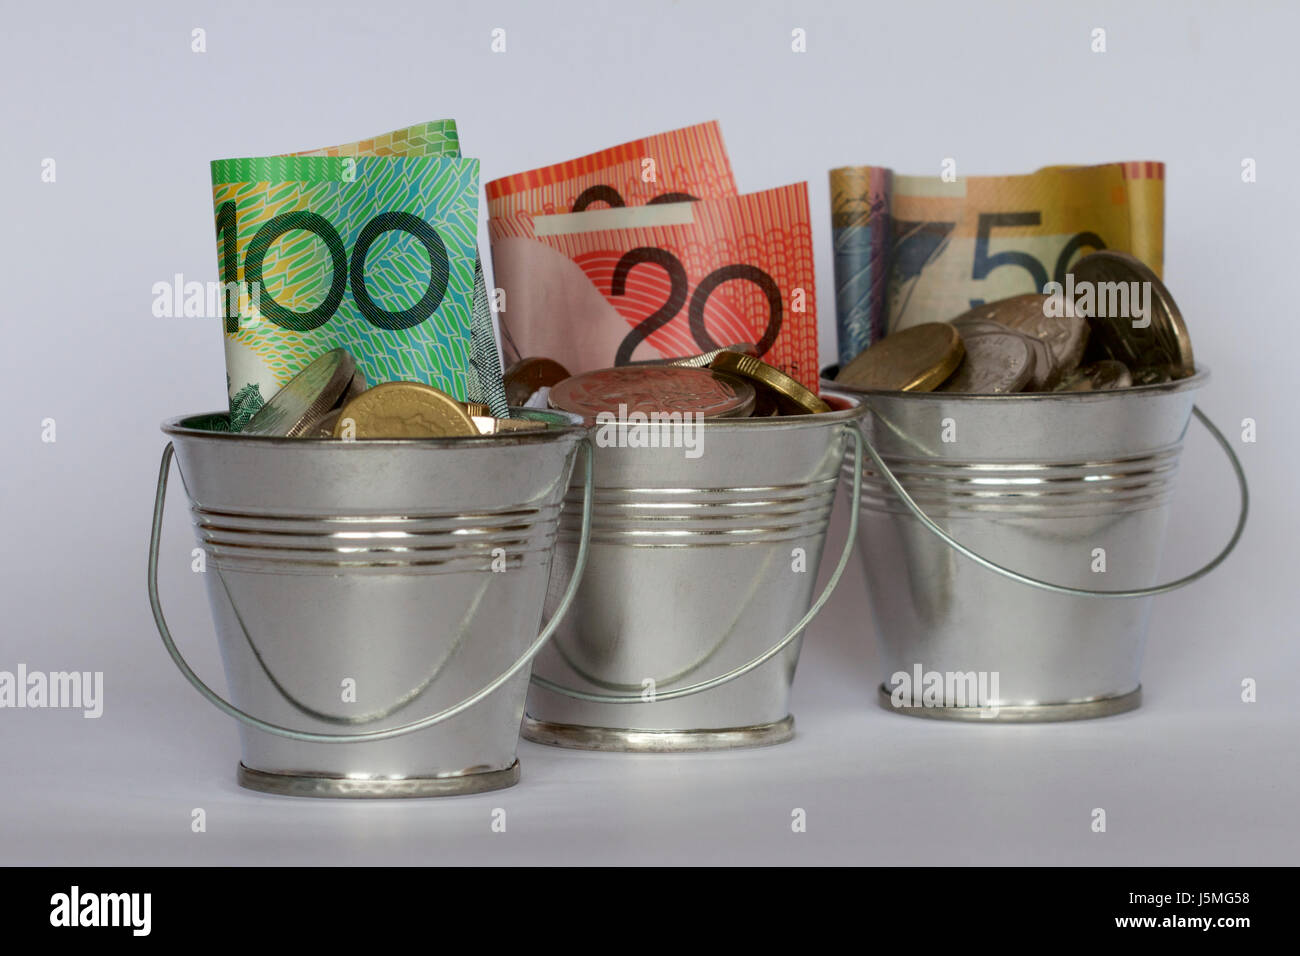 Australian dollars and coins in three buckets. Stock Photo